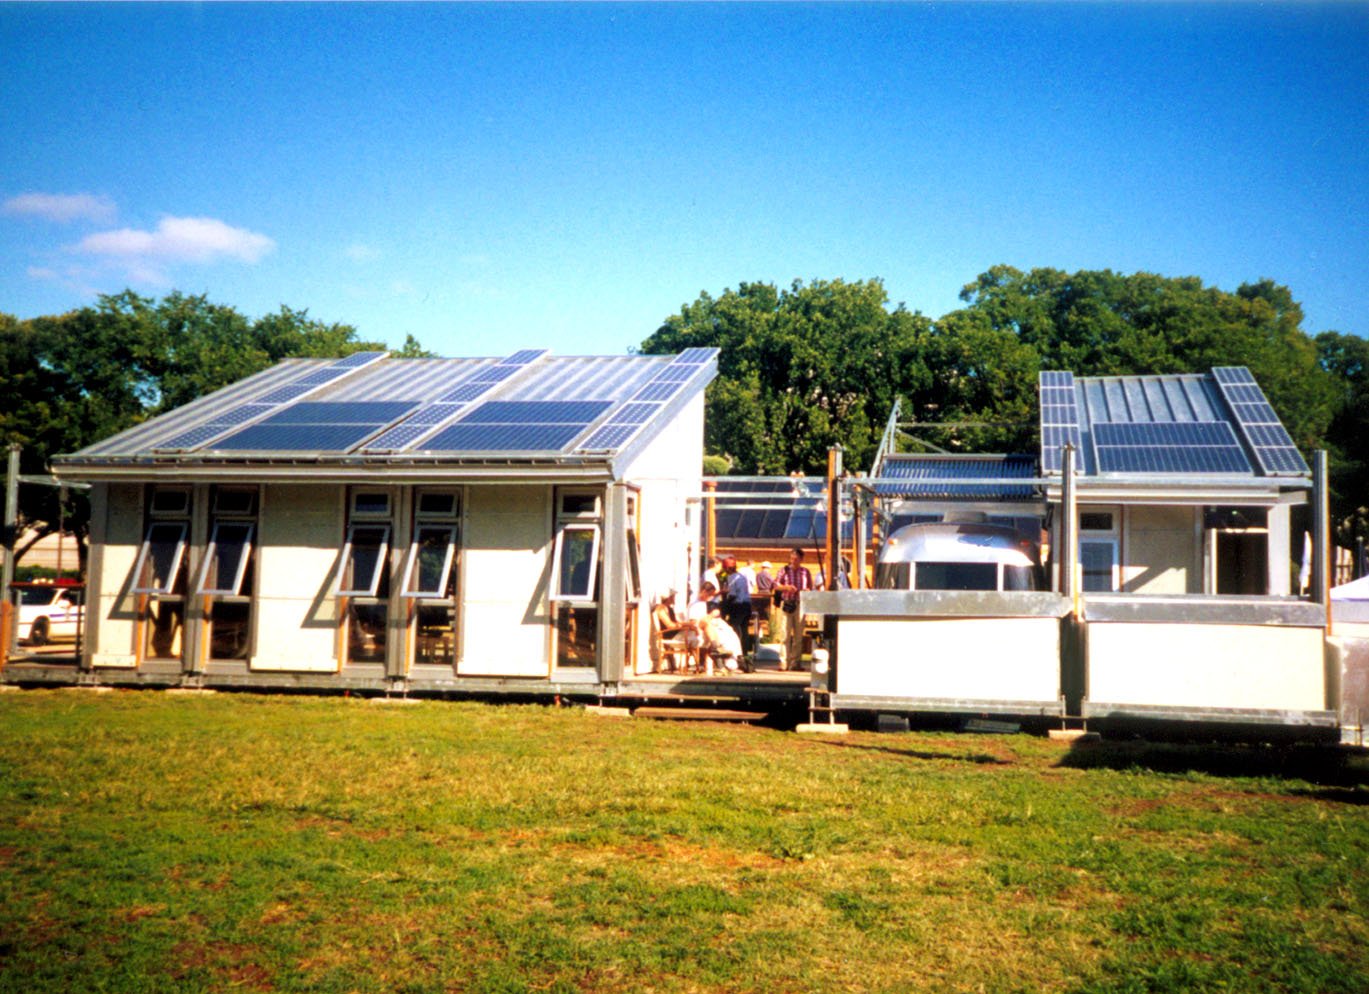 My First Project - The First Solar Decathlon-Architalks.jpg